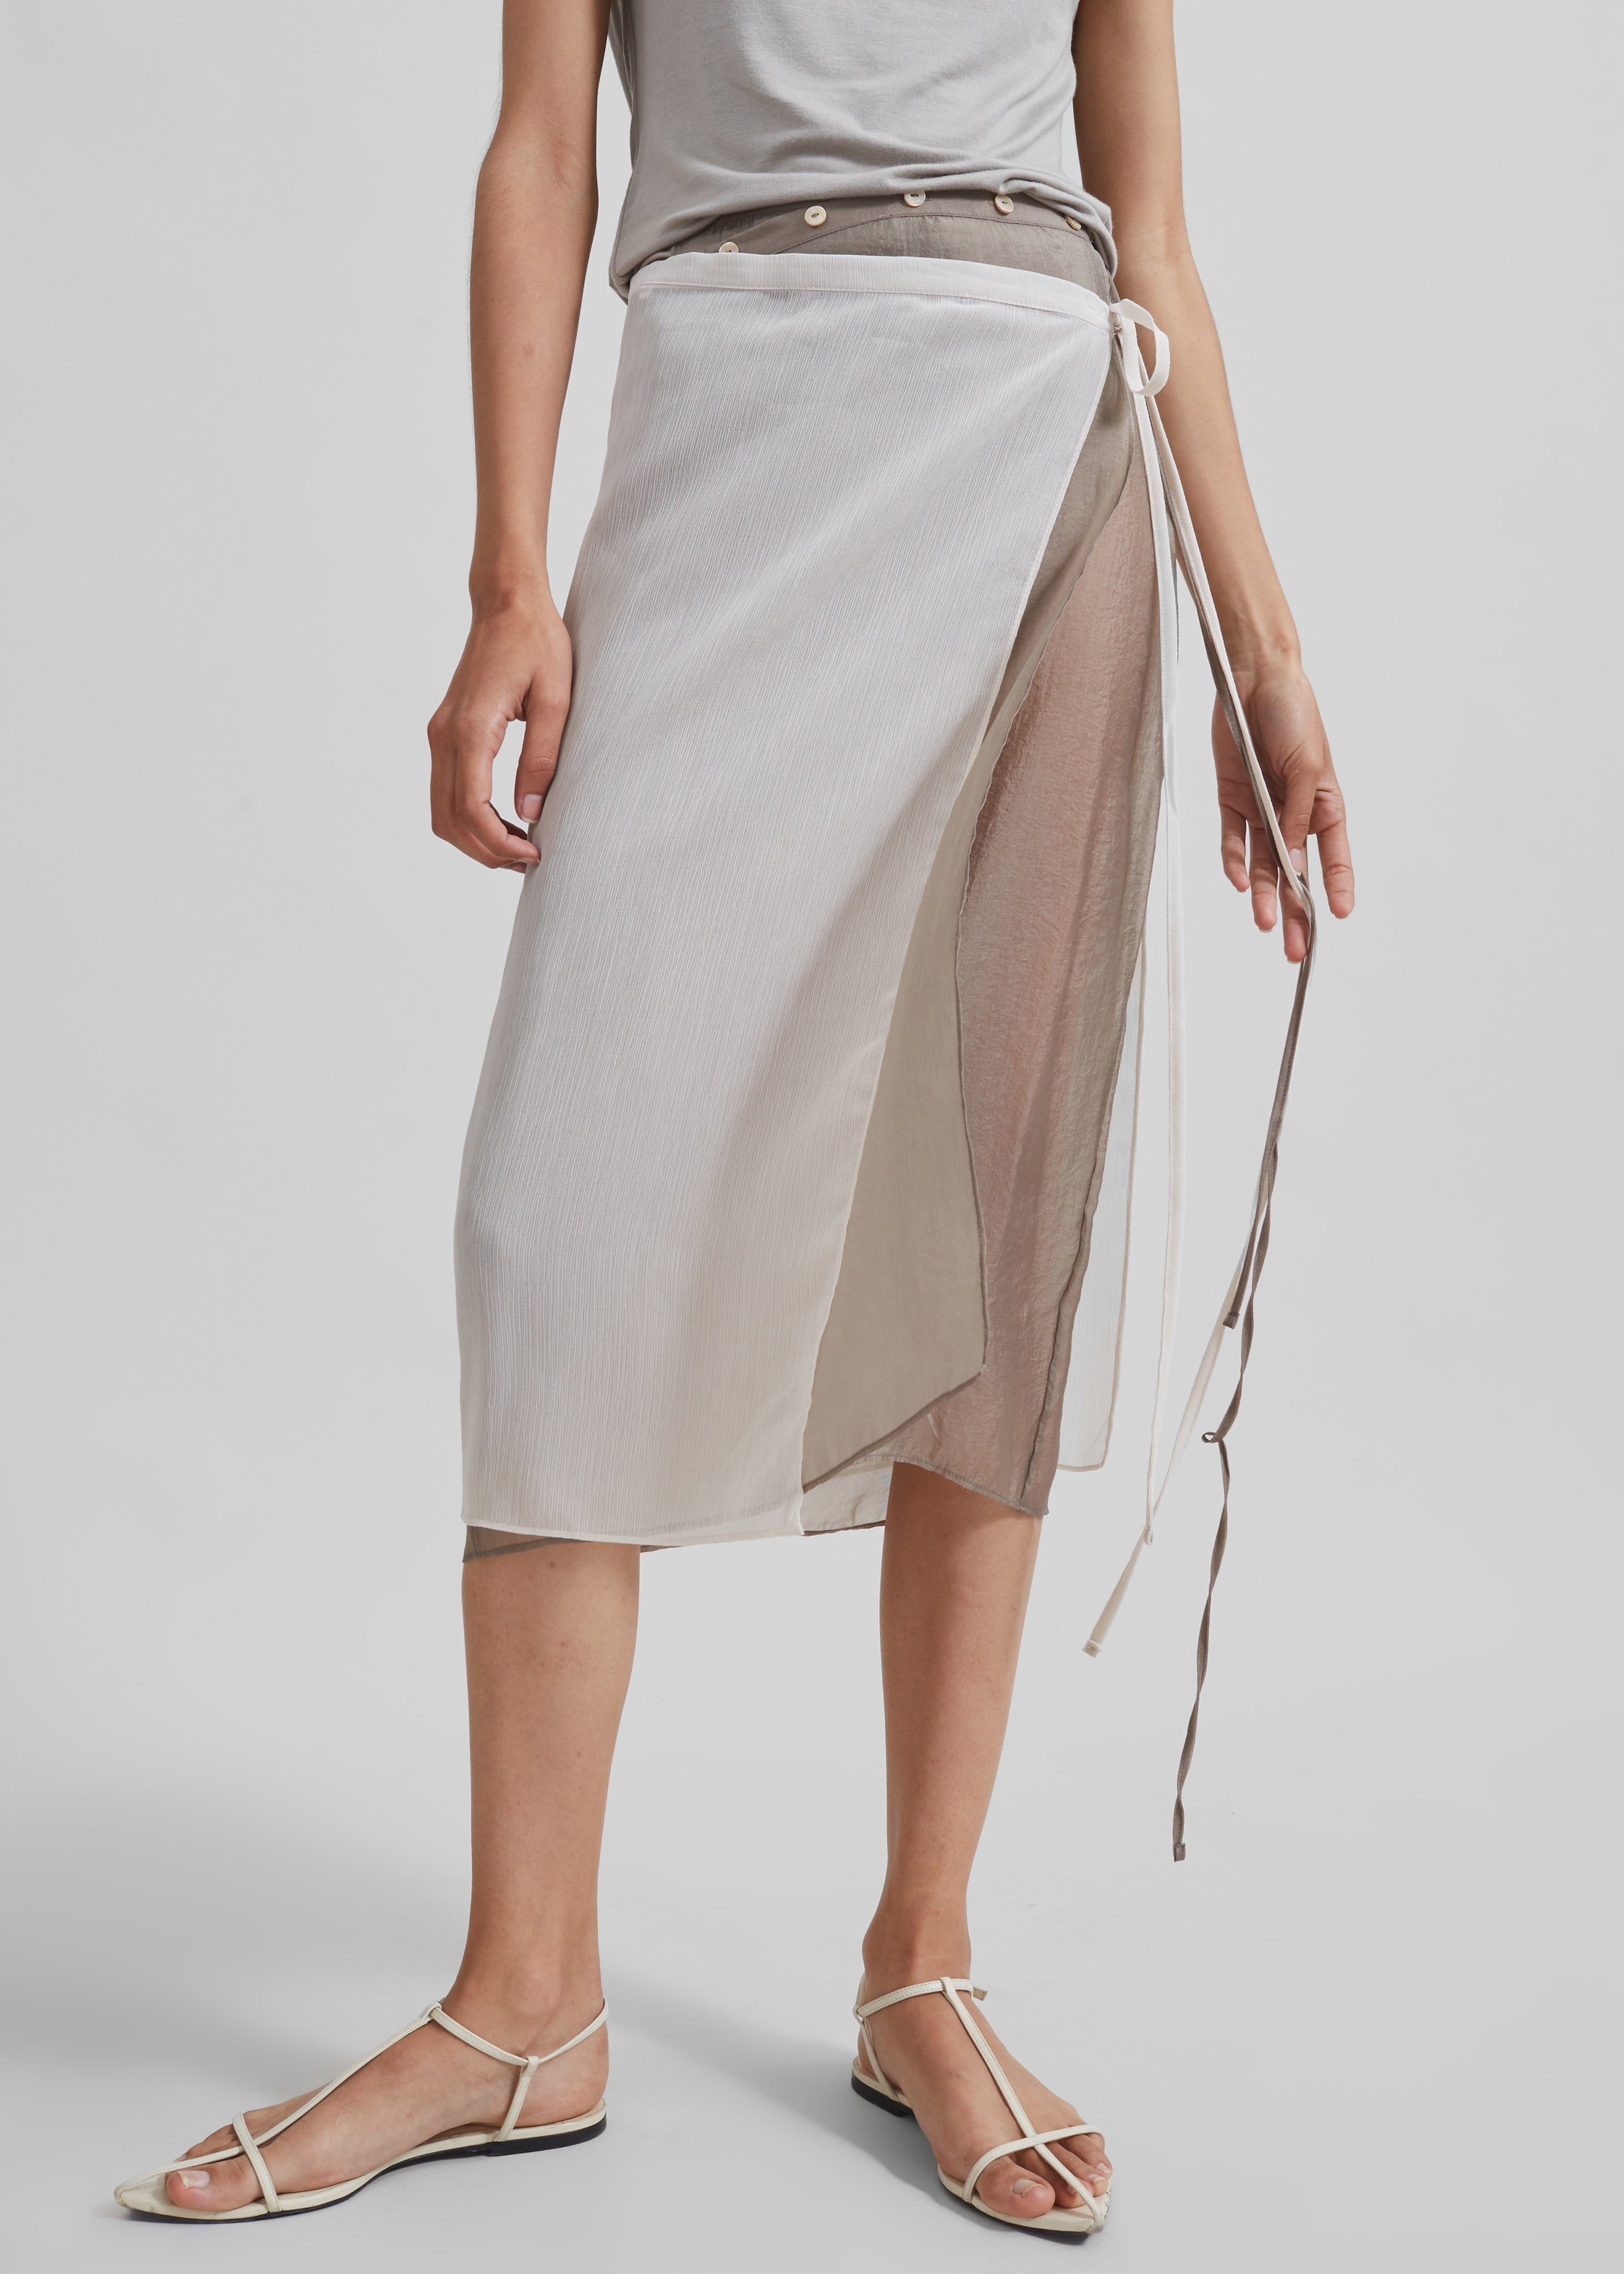 Tia Sheer Layered Skirt - Beige - 2